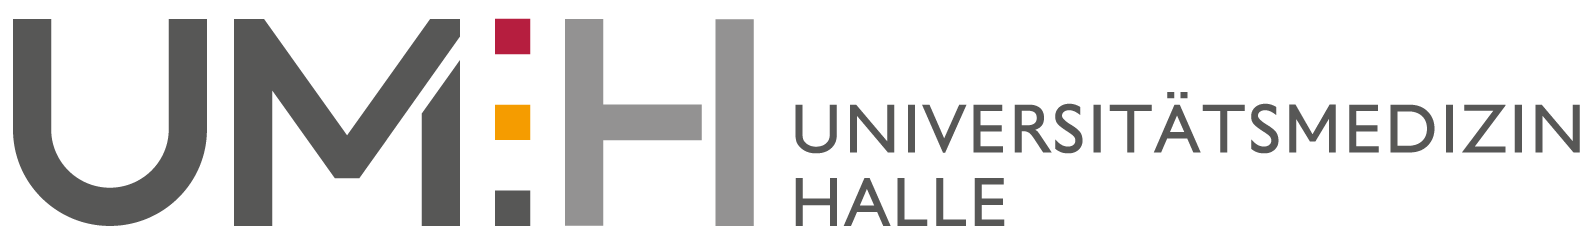 Logo: Universitätsmedizin Halle